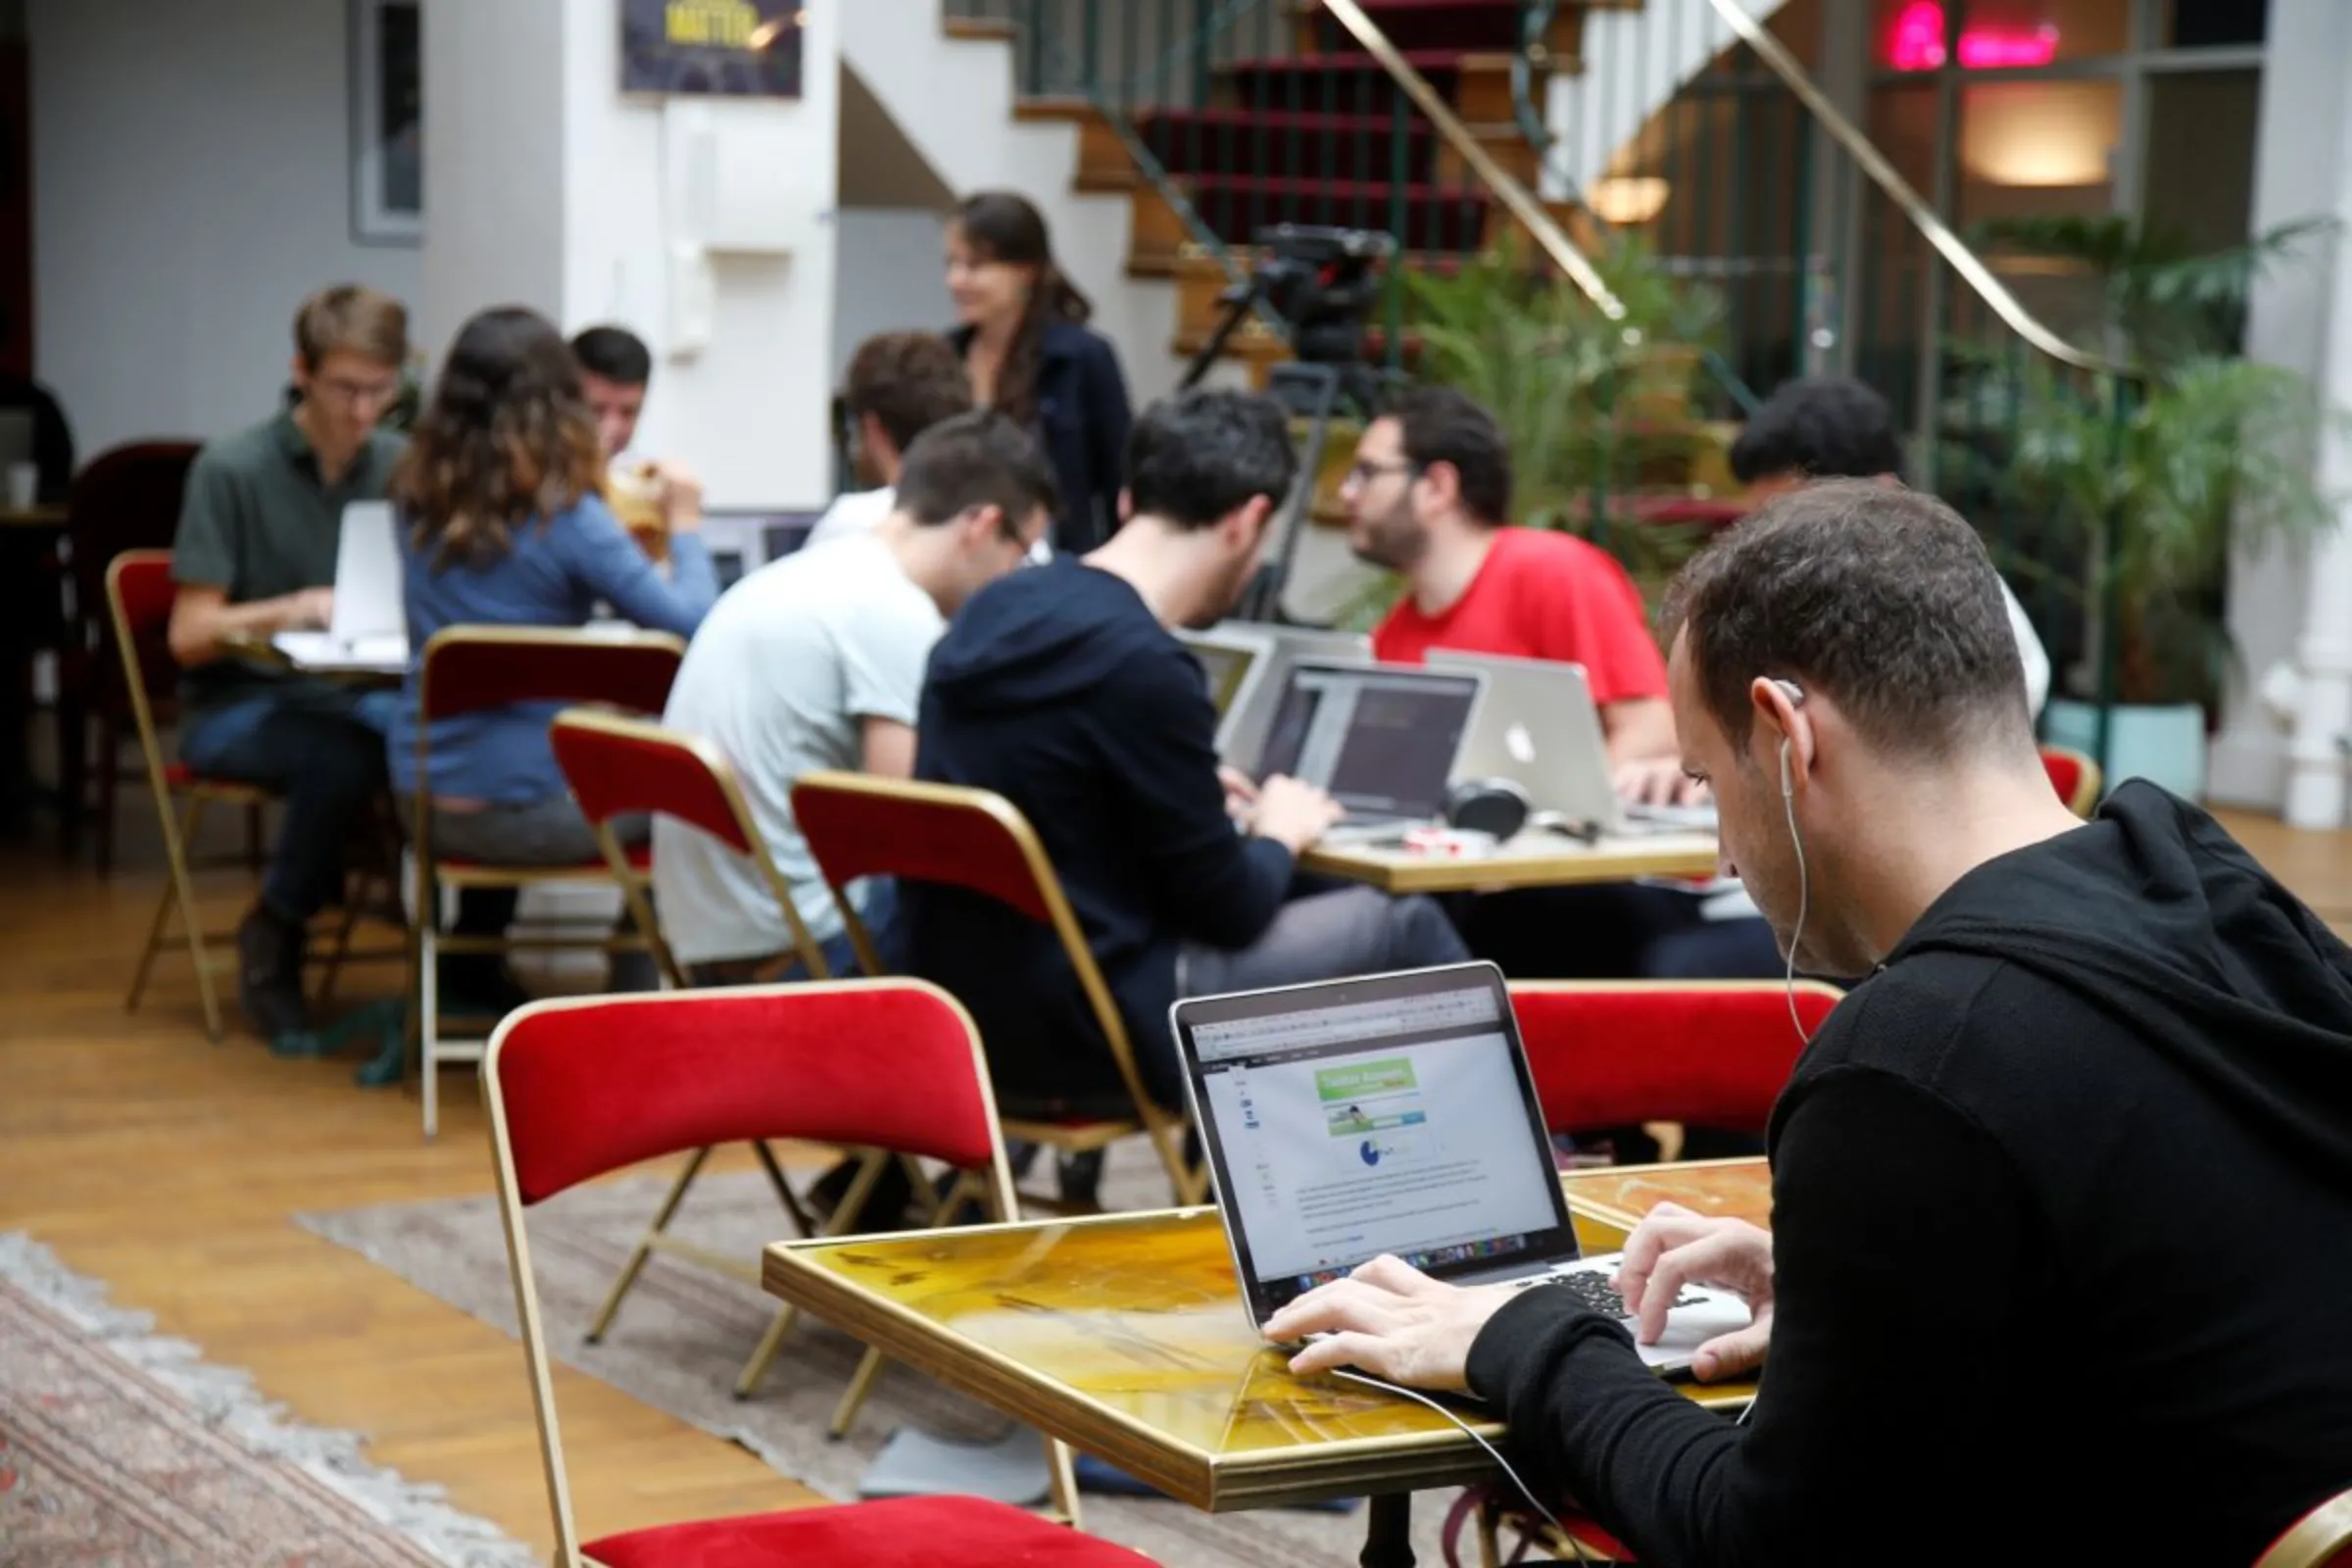 Entrepreneurs work at their computer laptops at 'TheFamily' in Paris, France, July 27, 2015. REUTERS/Charles Platiau